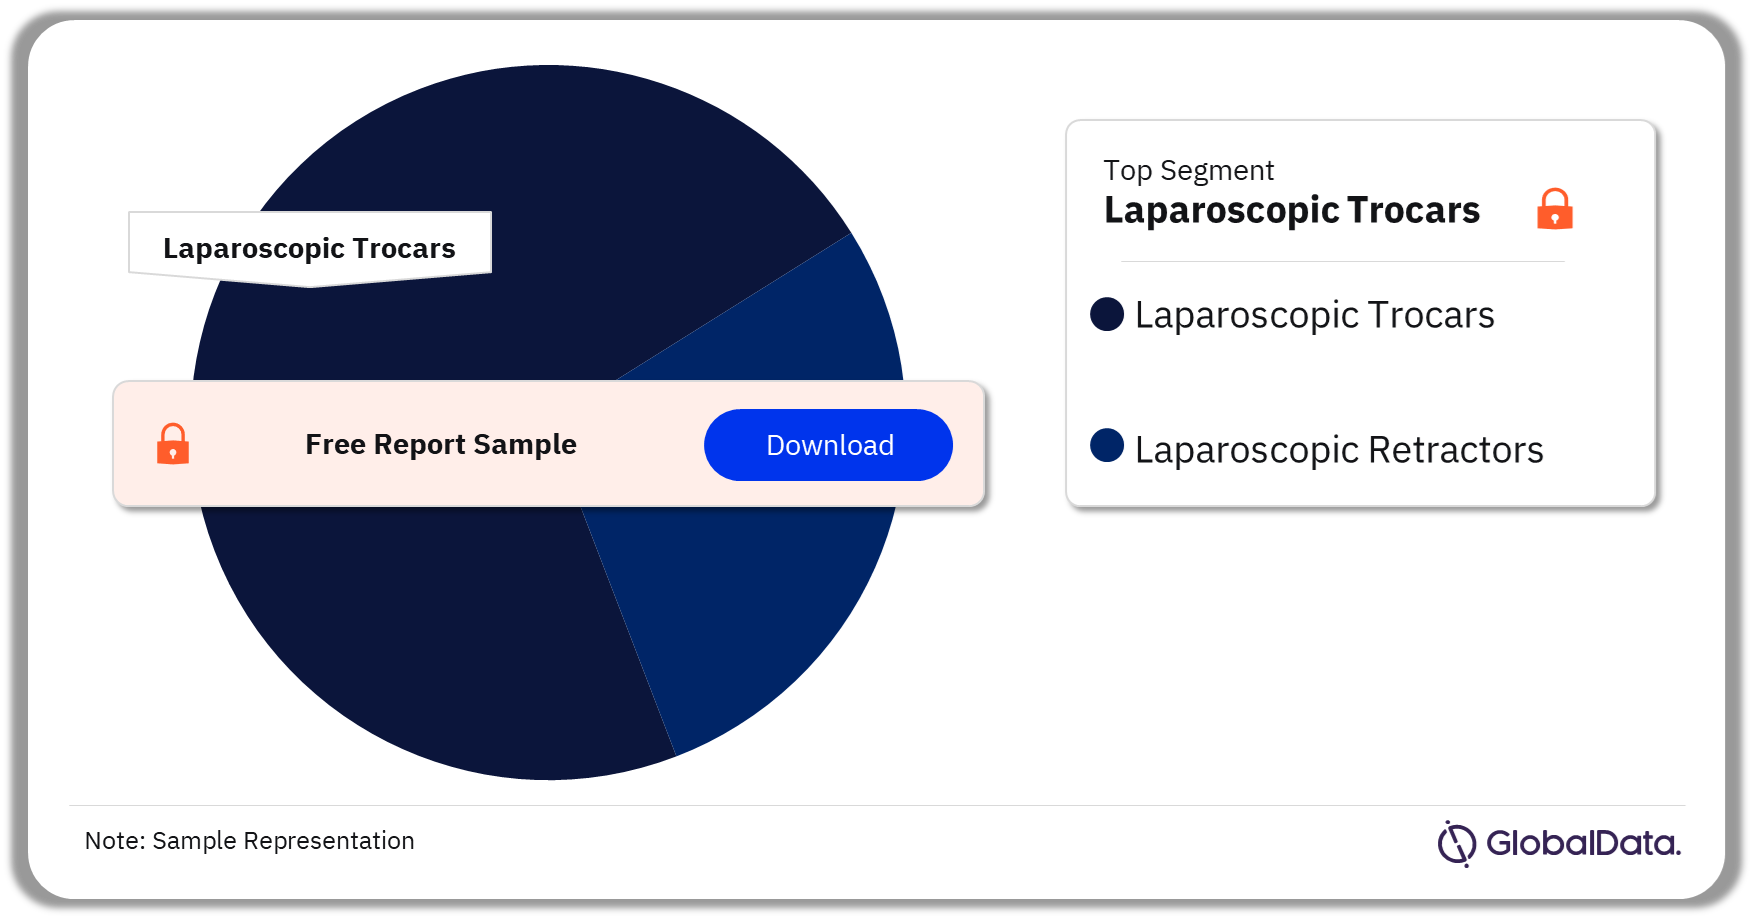 Laparoscopic Access Instruments Market Analysis by Segments, 2023 (%)